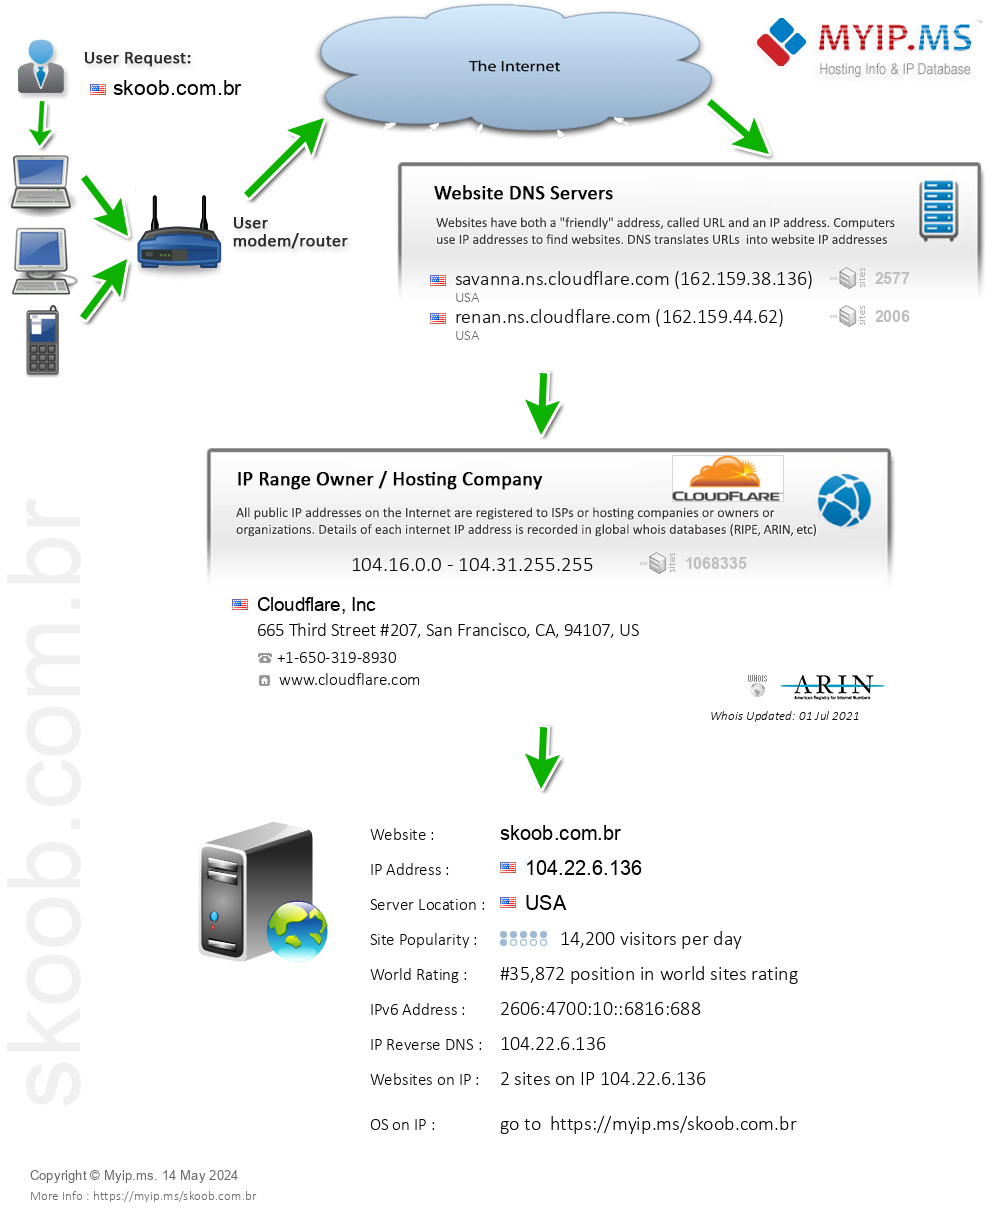 Skoob.com.br - Website Hosting Visual IP Diagram